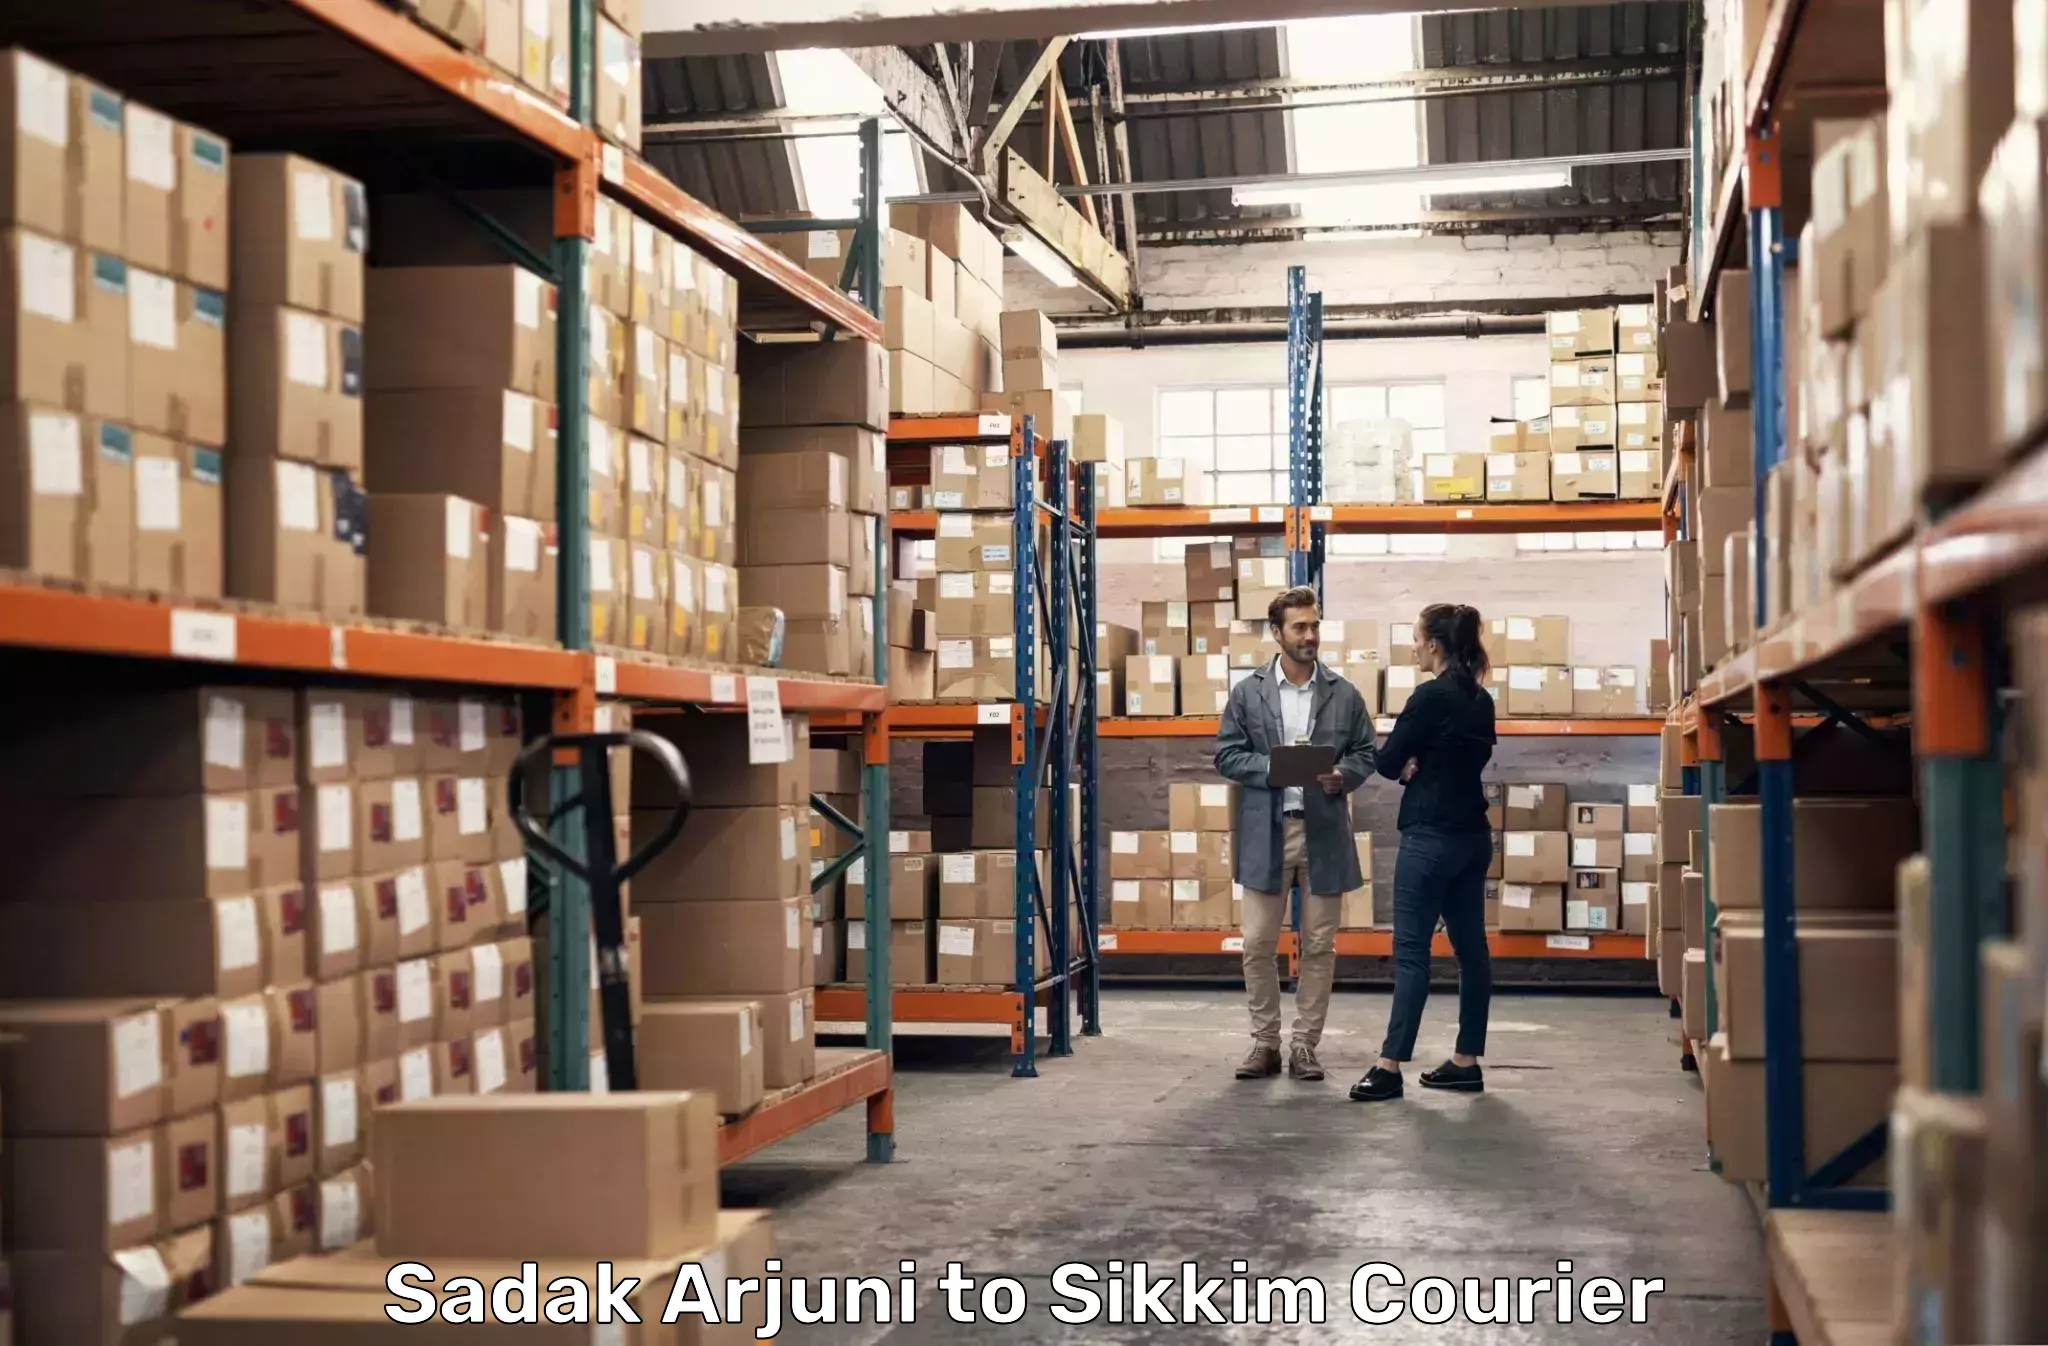 Doorstep delivery service Sadak Arjuni to South Sikkim